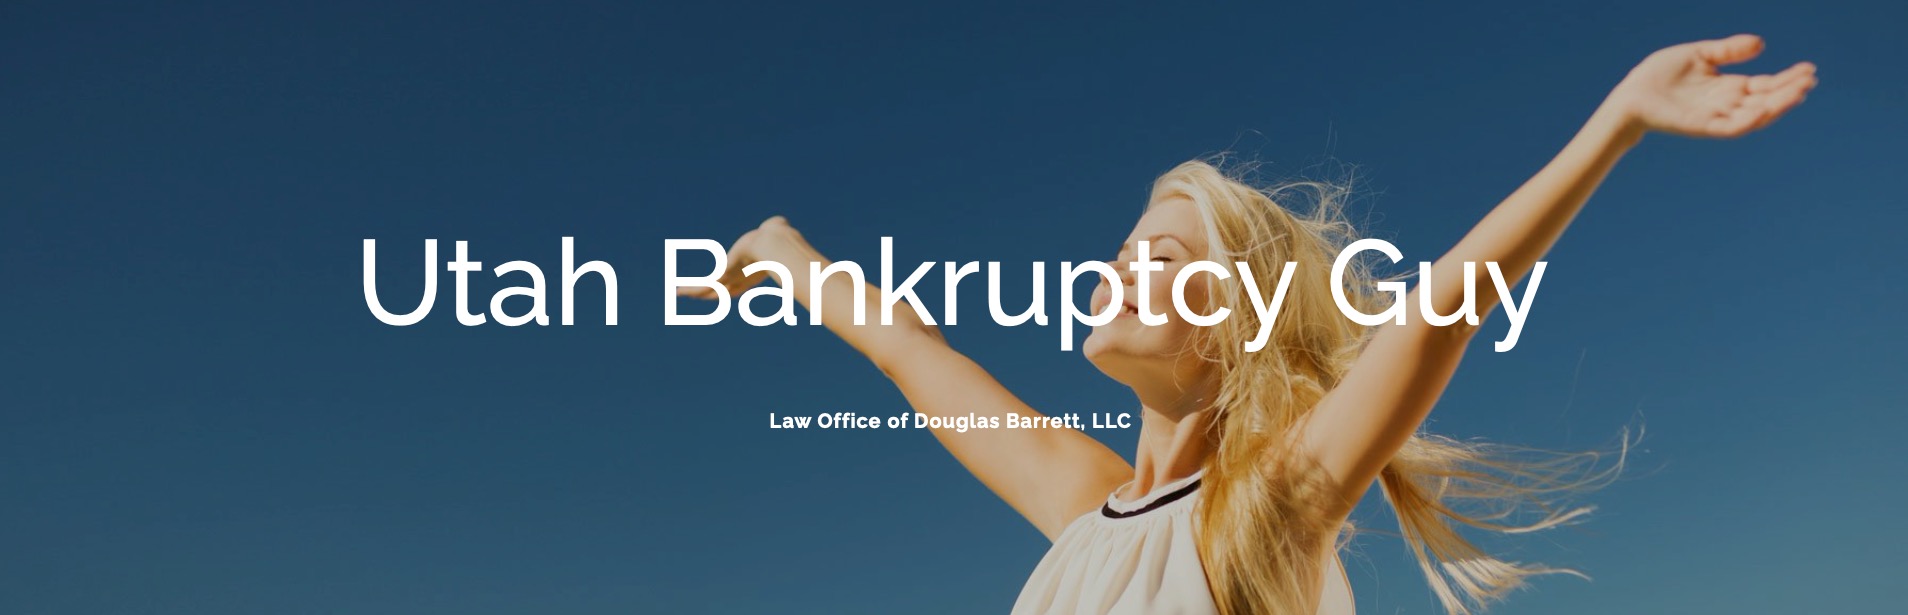 Utah Bankruptcy guy